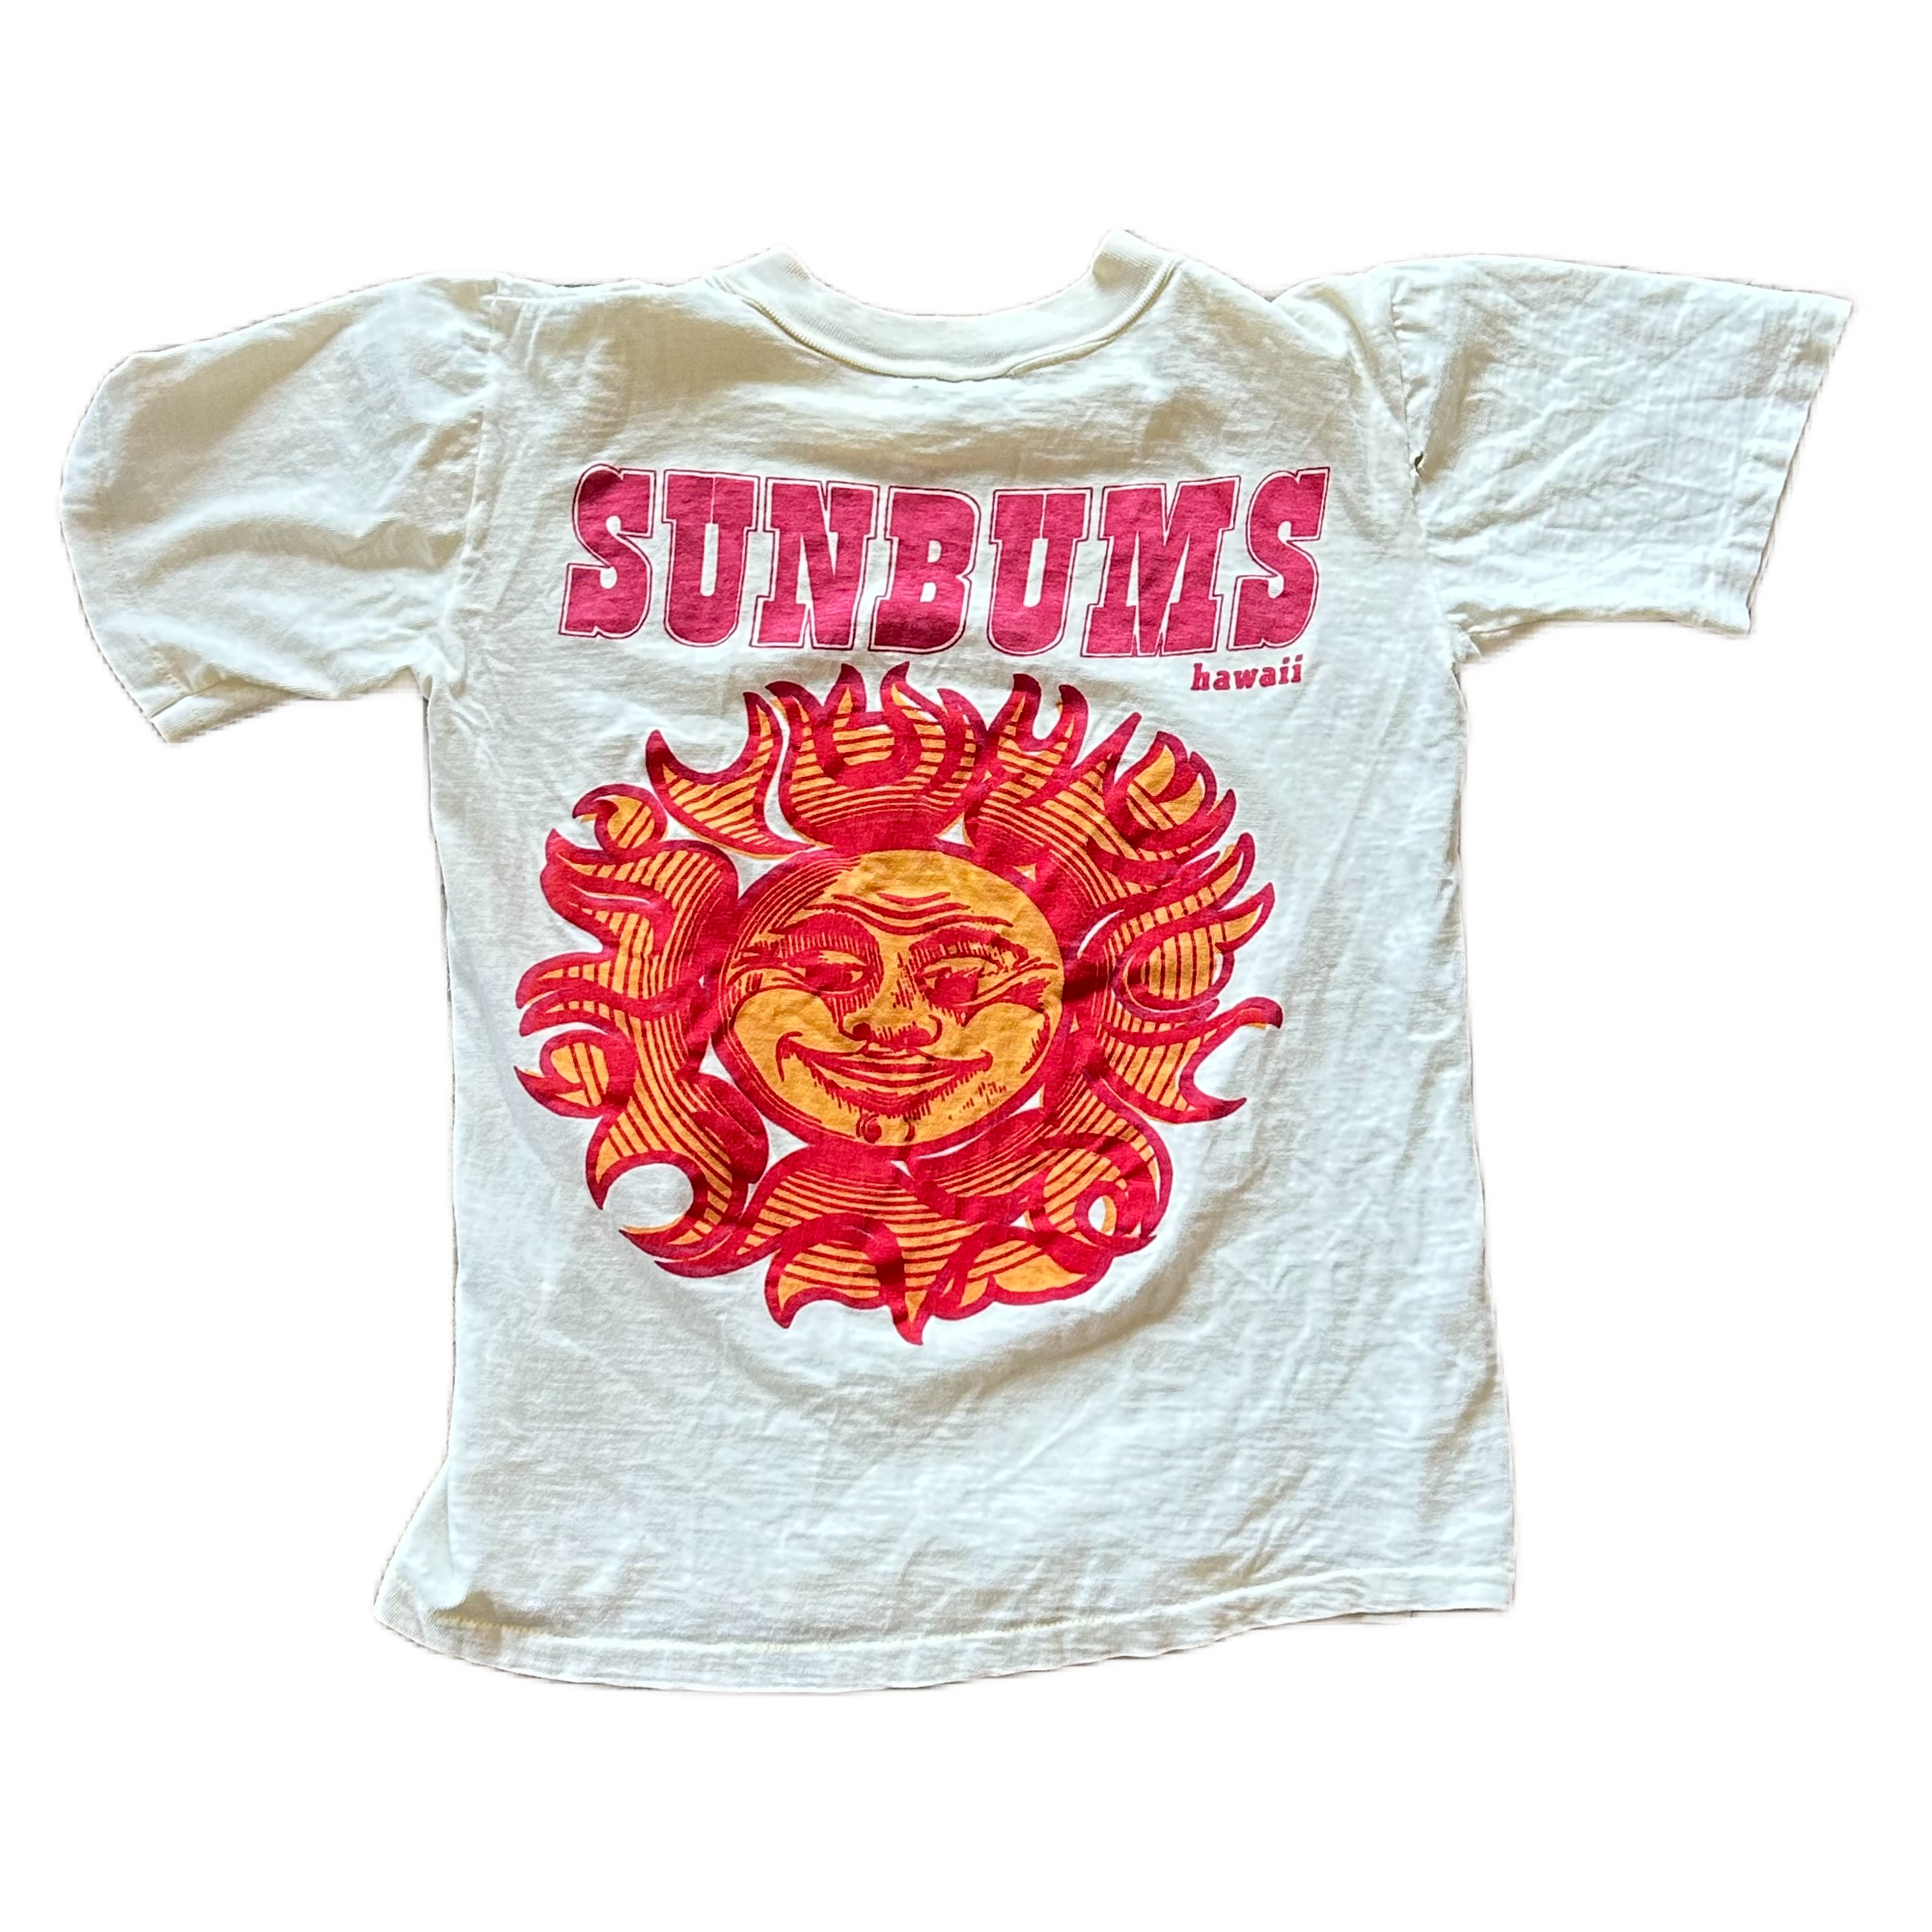 Vintage 1960s Sunbum Crazy Shirts Tee